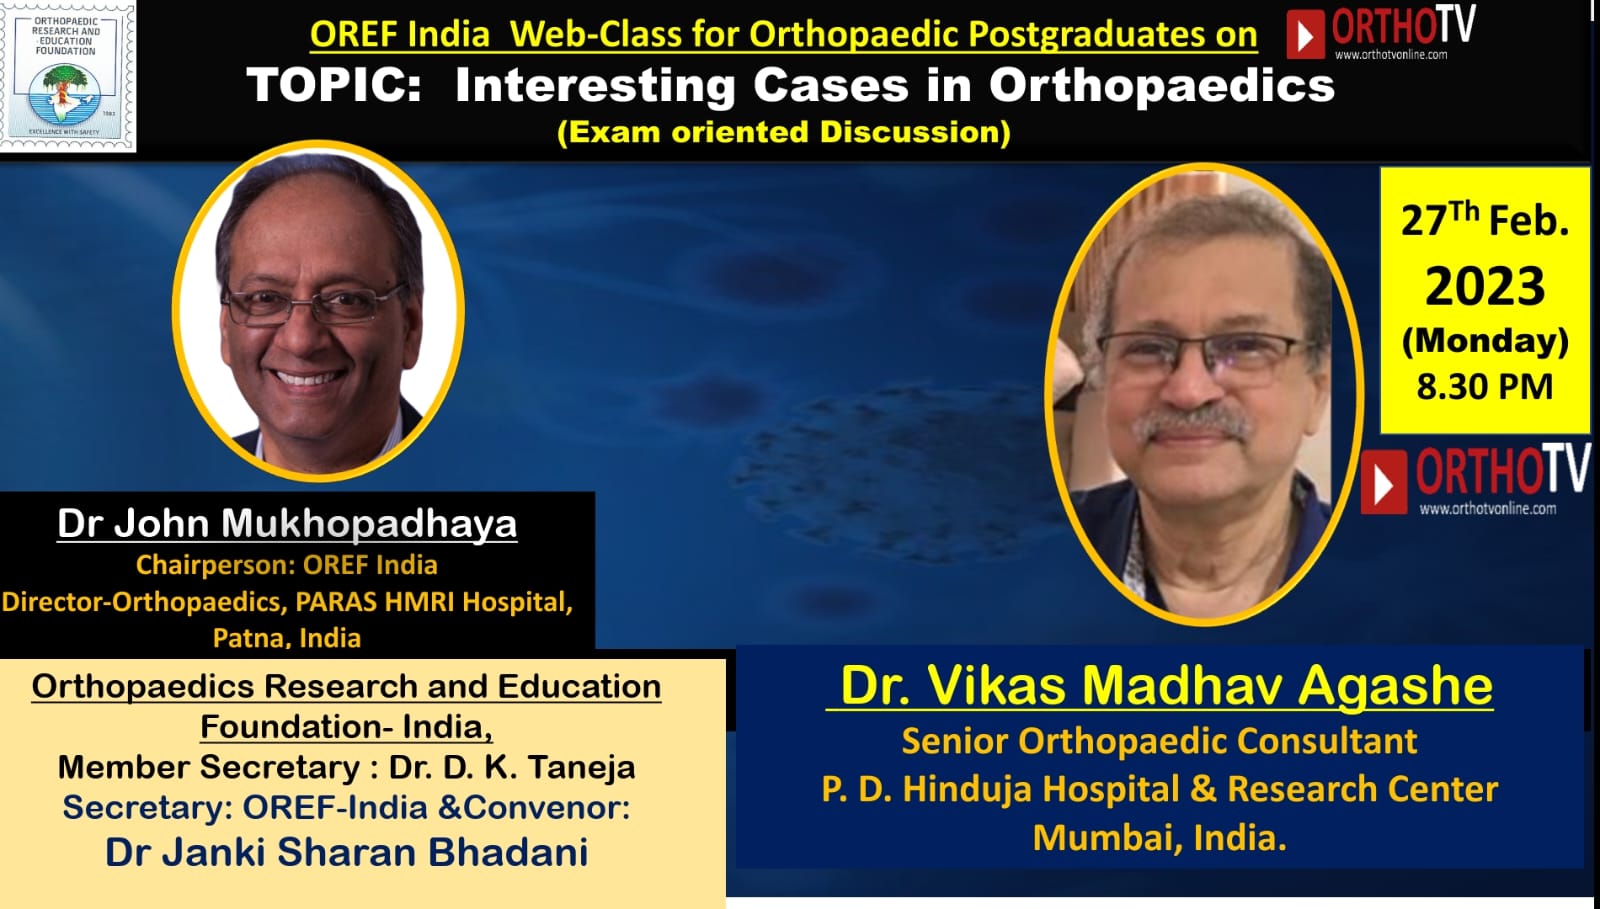 OREF Web-class for Orthopaedic Postgraduates on OrthoTV - Interesting Cases in Orthopaedics